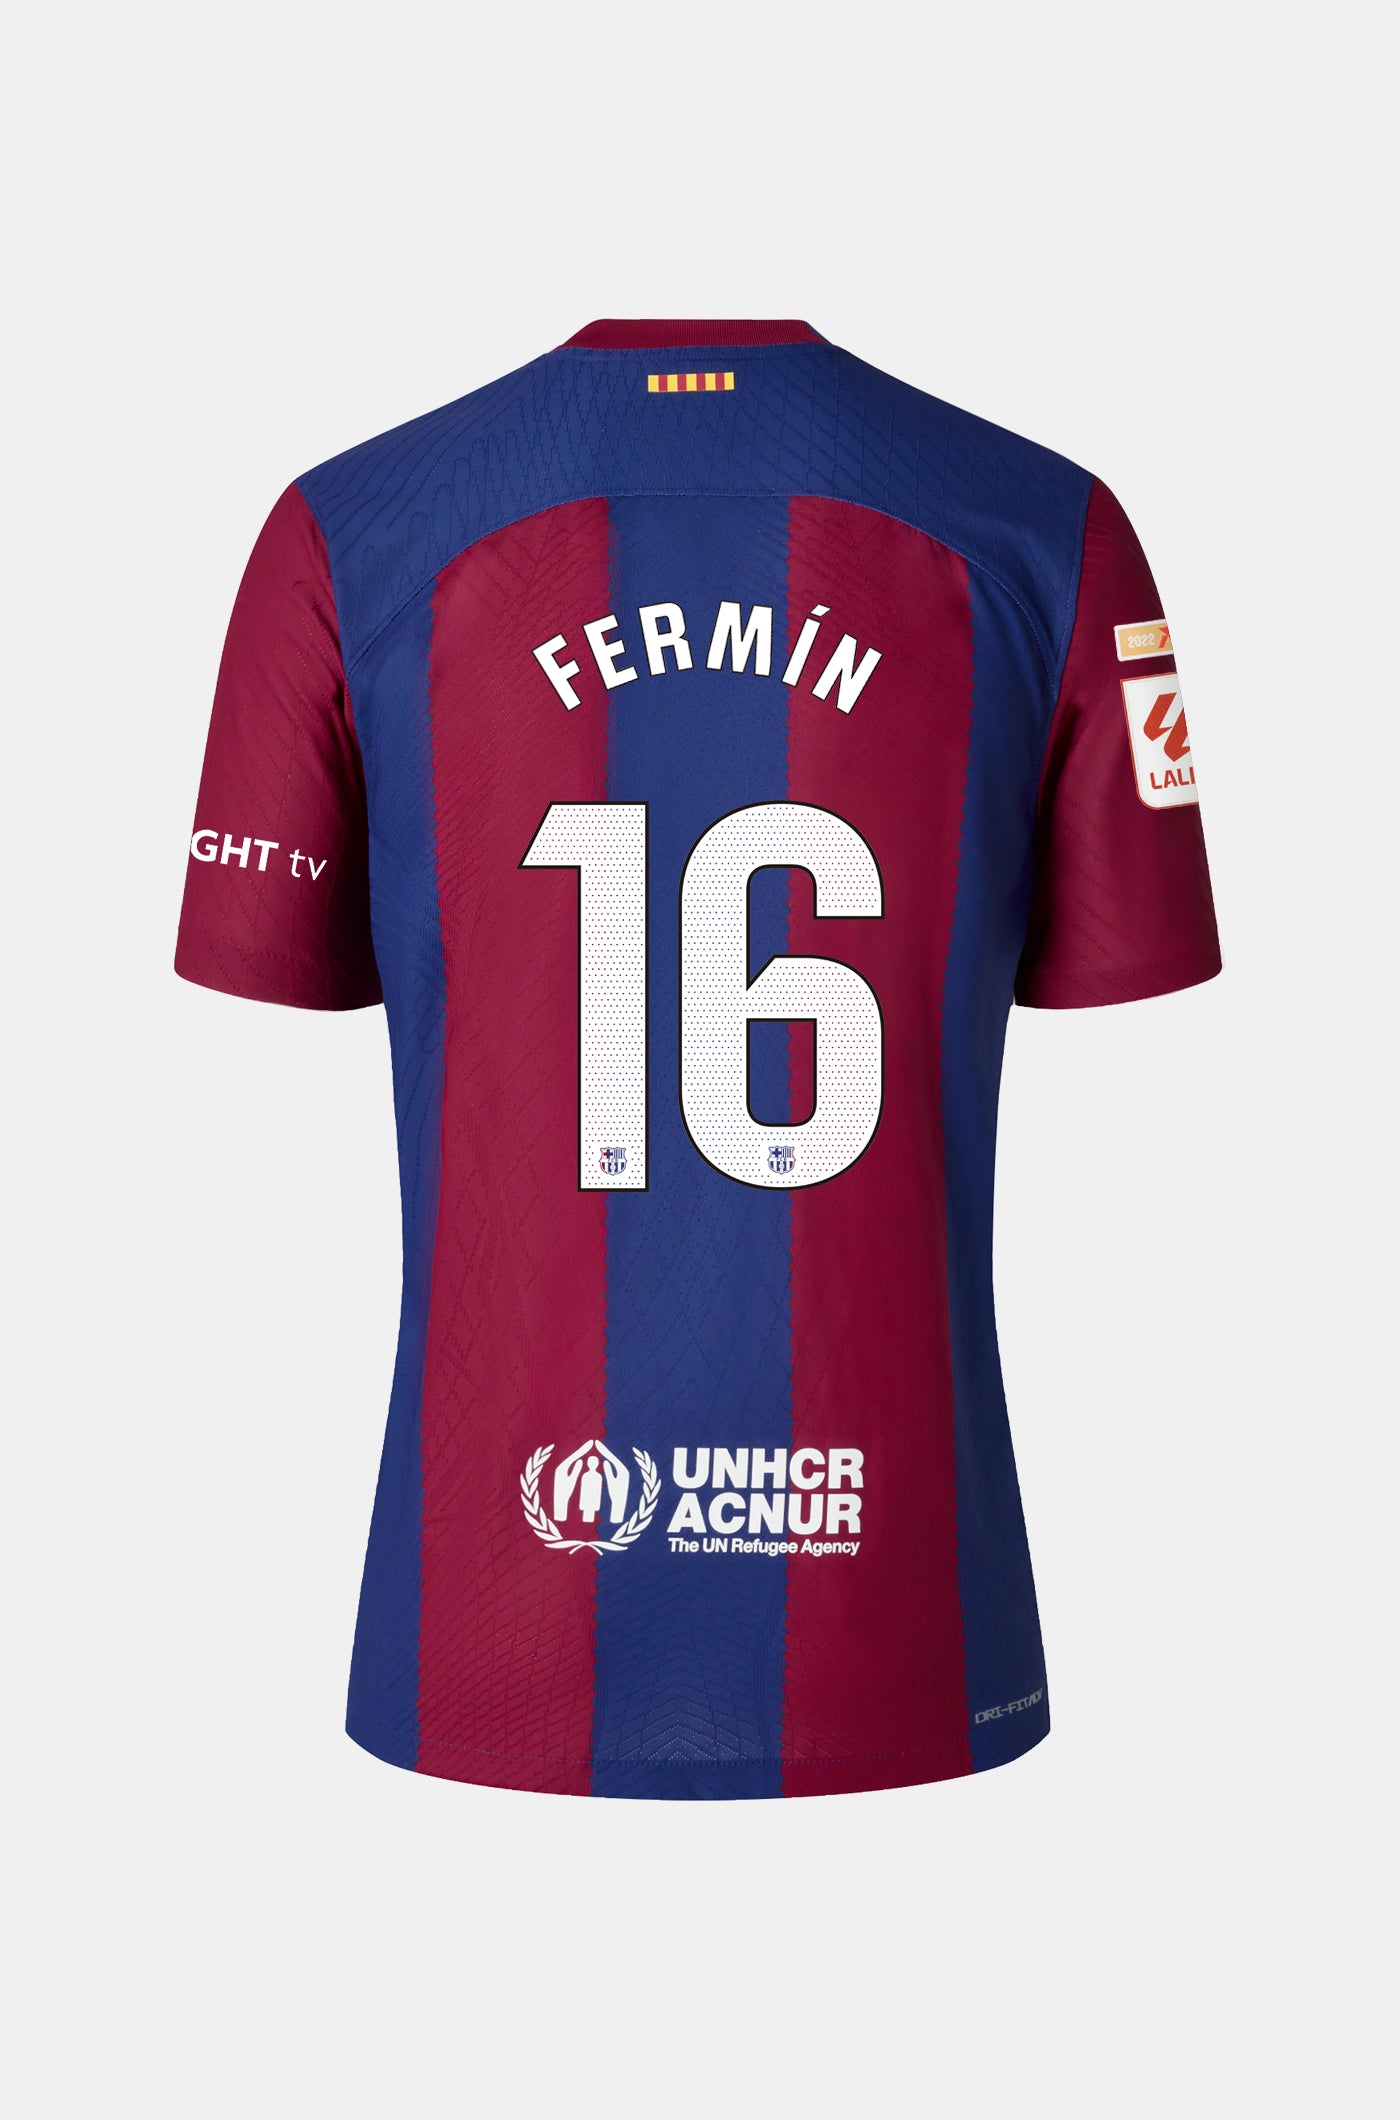 LFP FC Barcelona home shirt 23/24 Player's Edition - FERMÍN